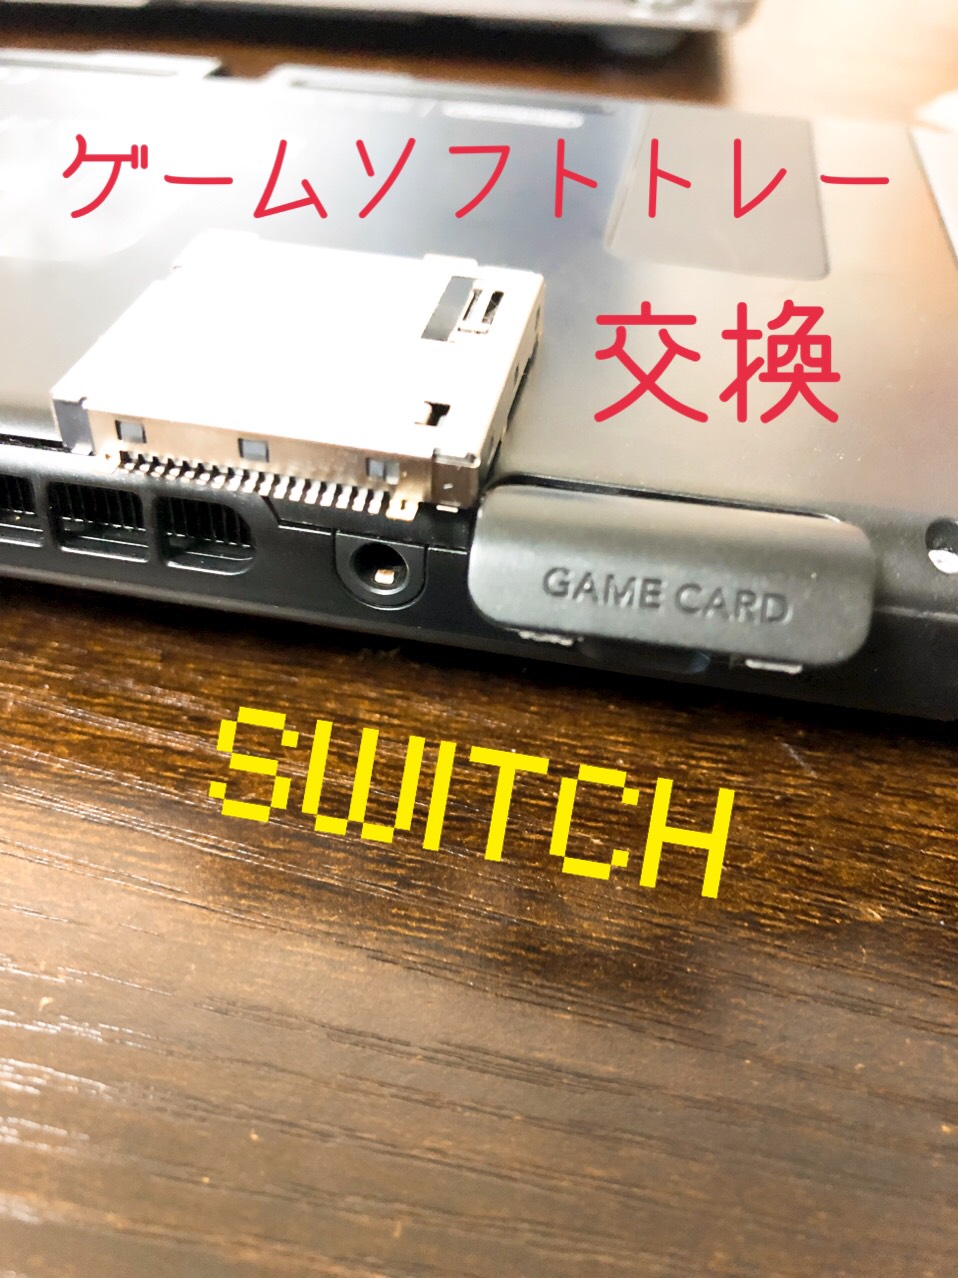 Nintendo Switch ゲームソフトが読み込まない時の修理方法 Nintendo3ds Switch Psp 修理のゲームホスピタル Nintendo3ds ニンテンドーds Psp 修理